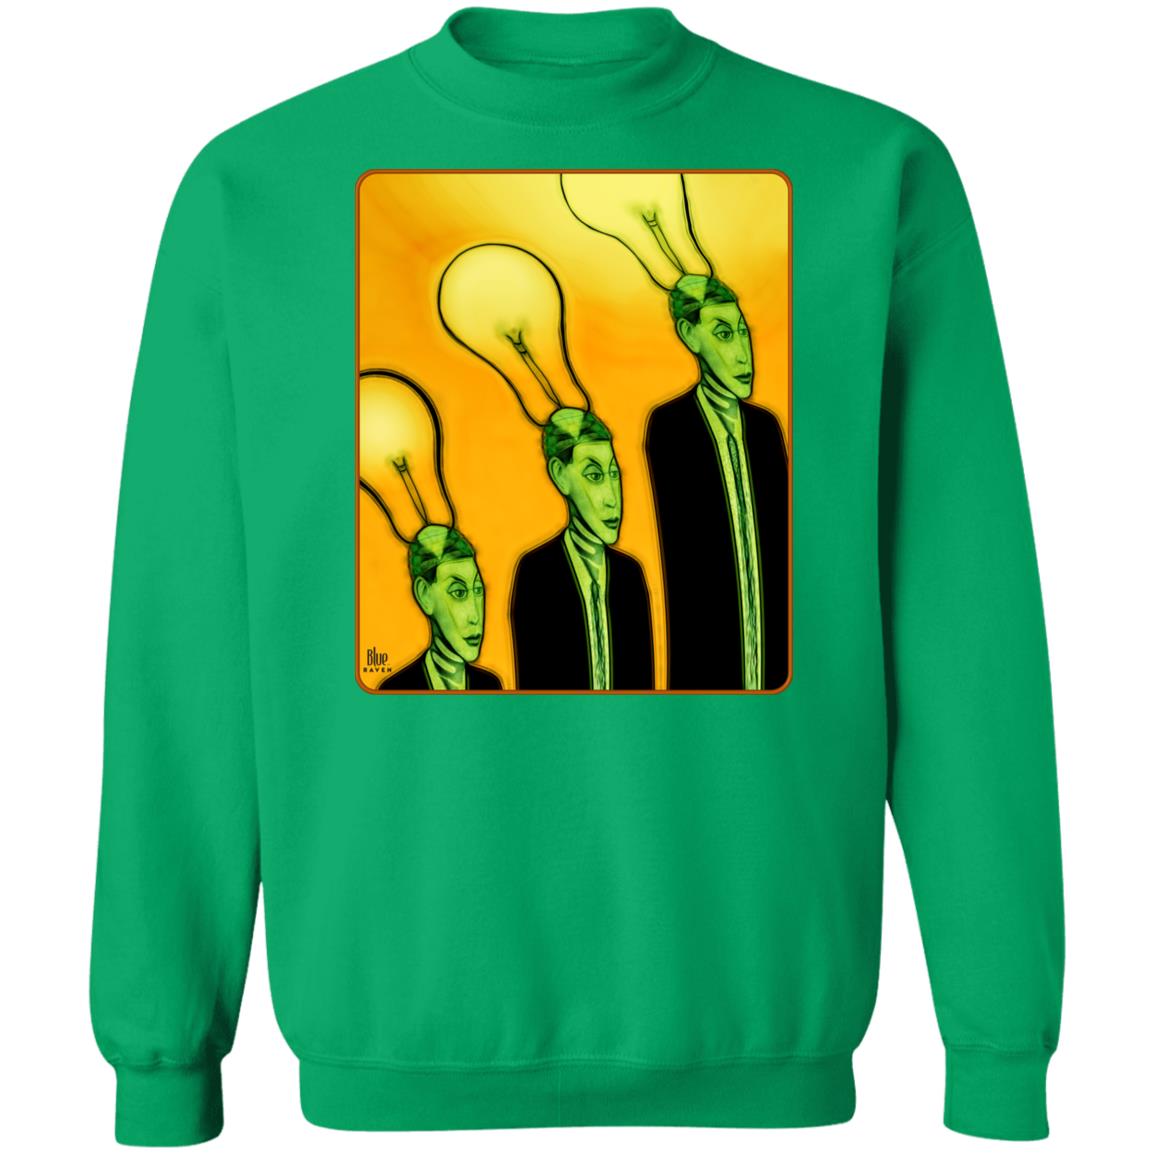 Brighter Idea - Men's Crew Neck Sweatshirt